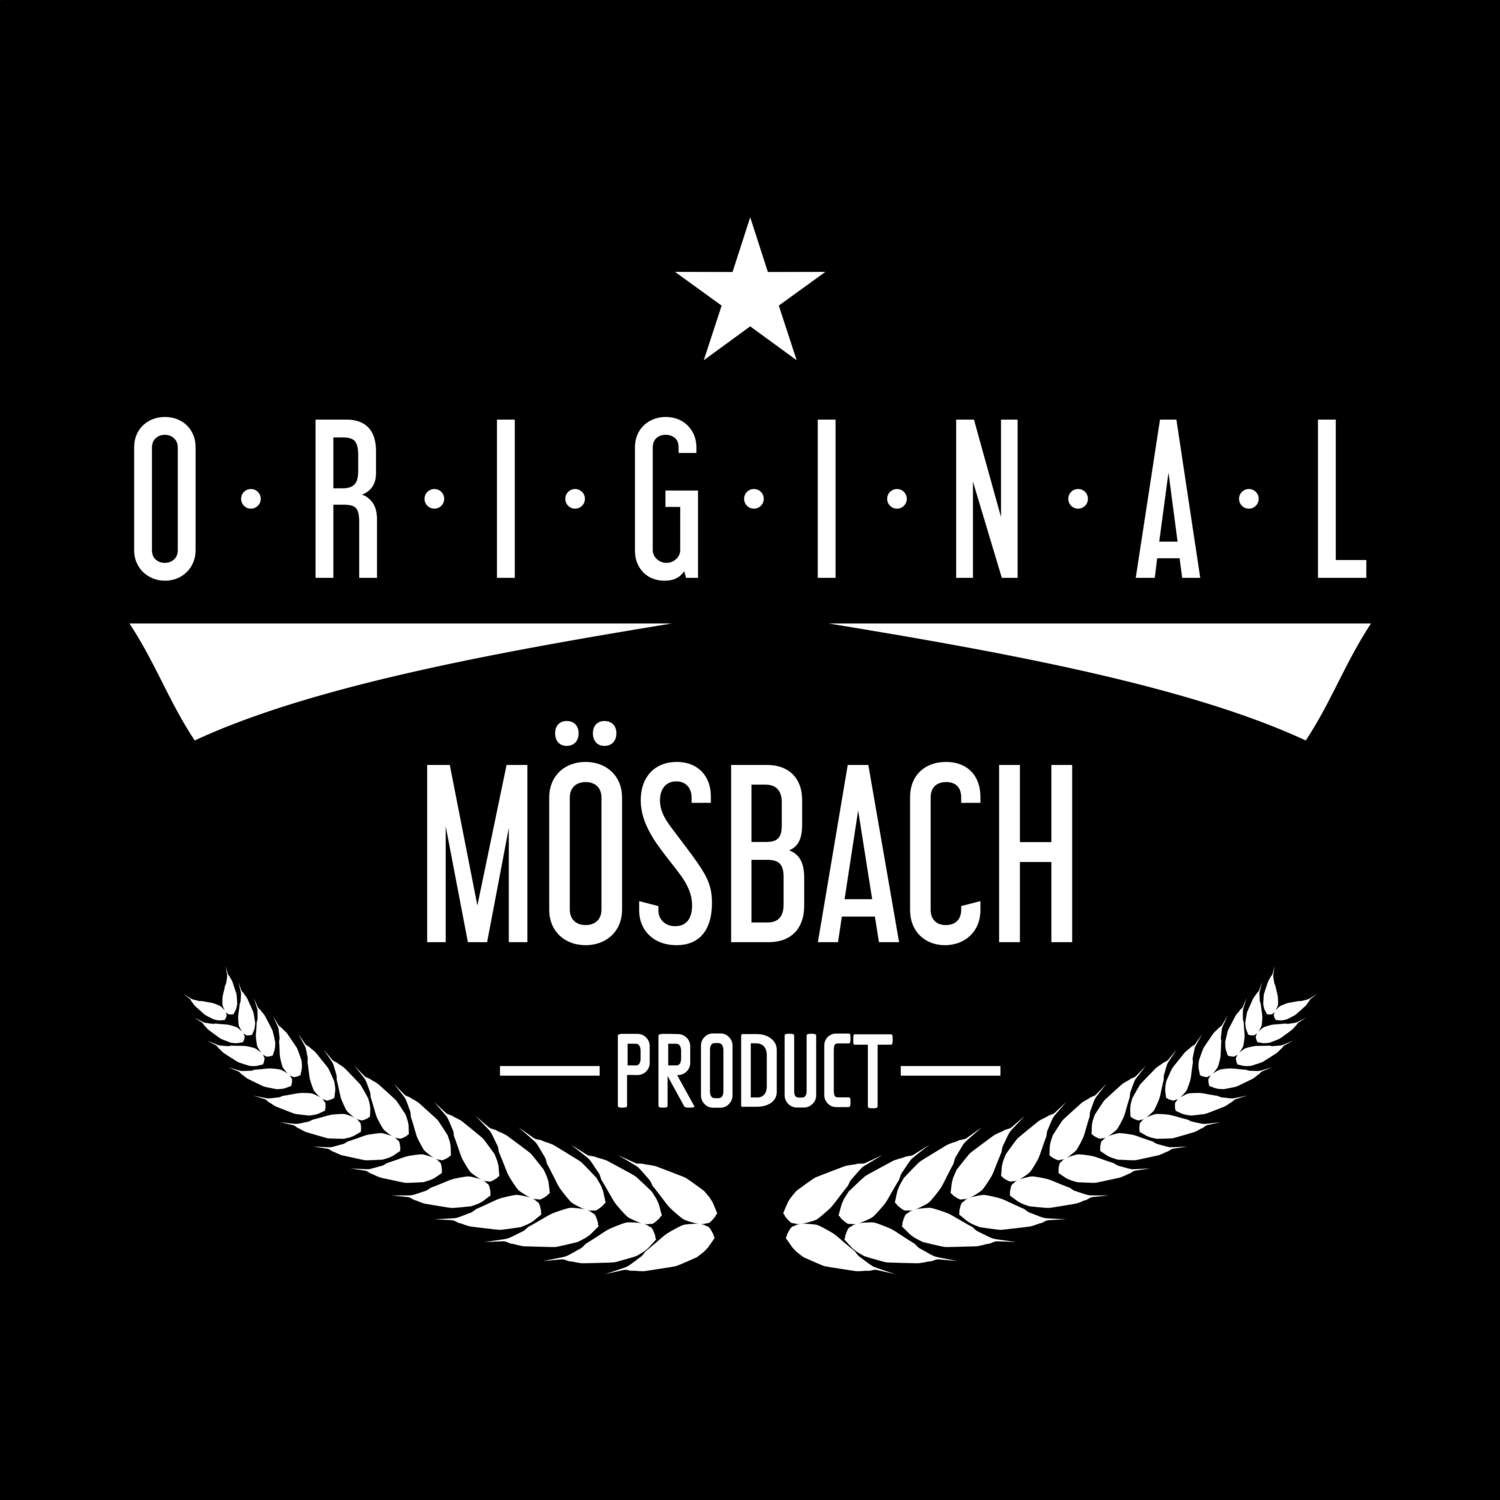 Mösbach T-Shirt »Original Product«